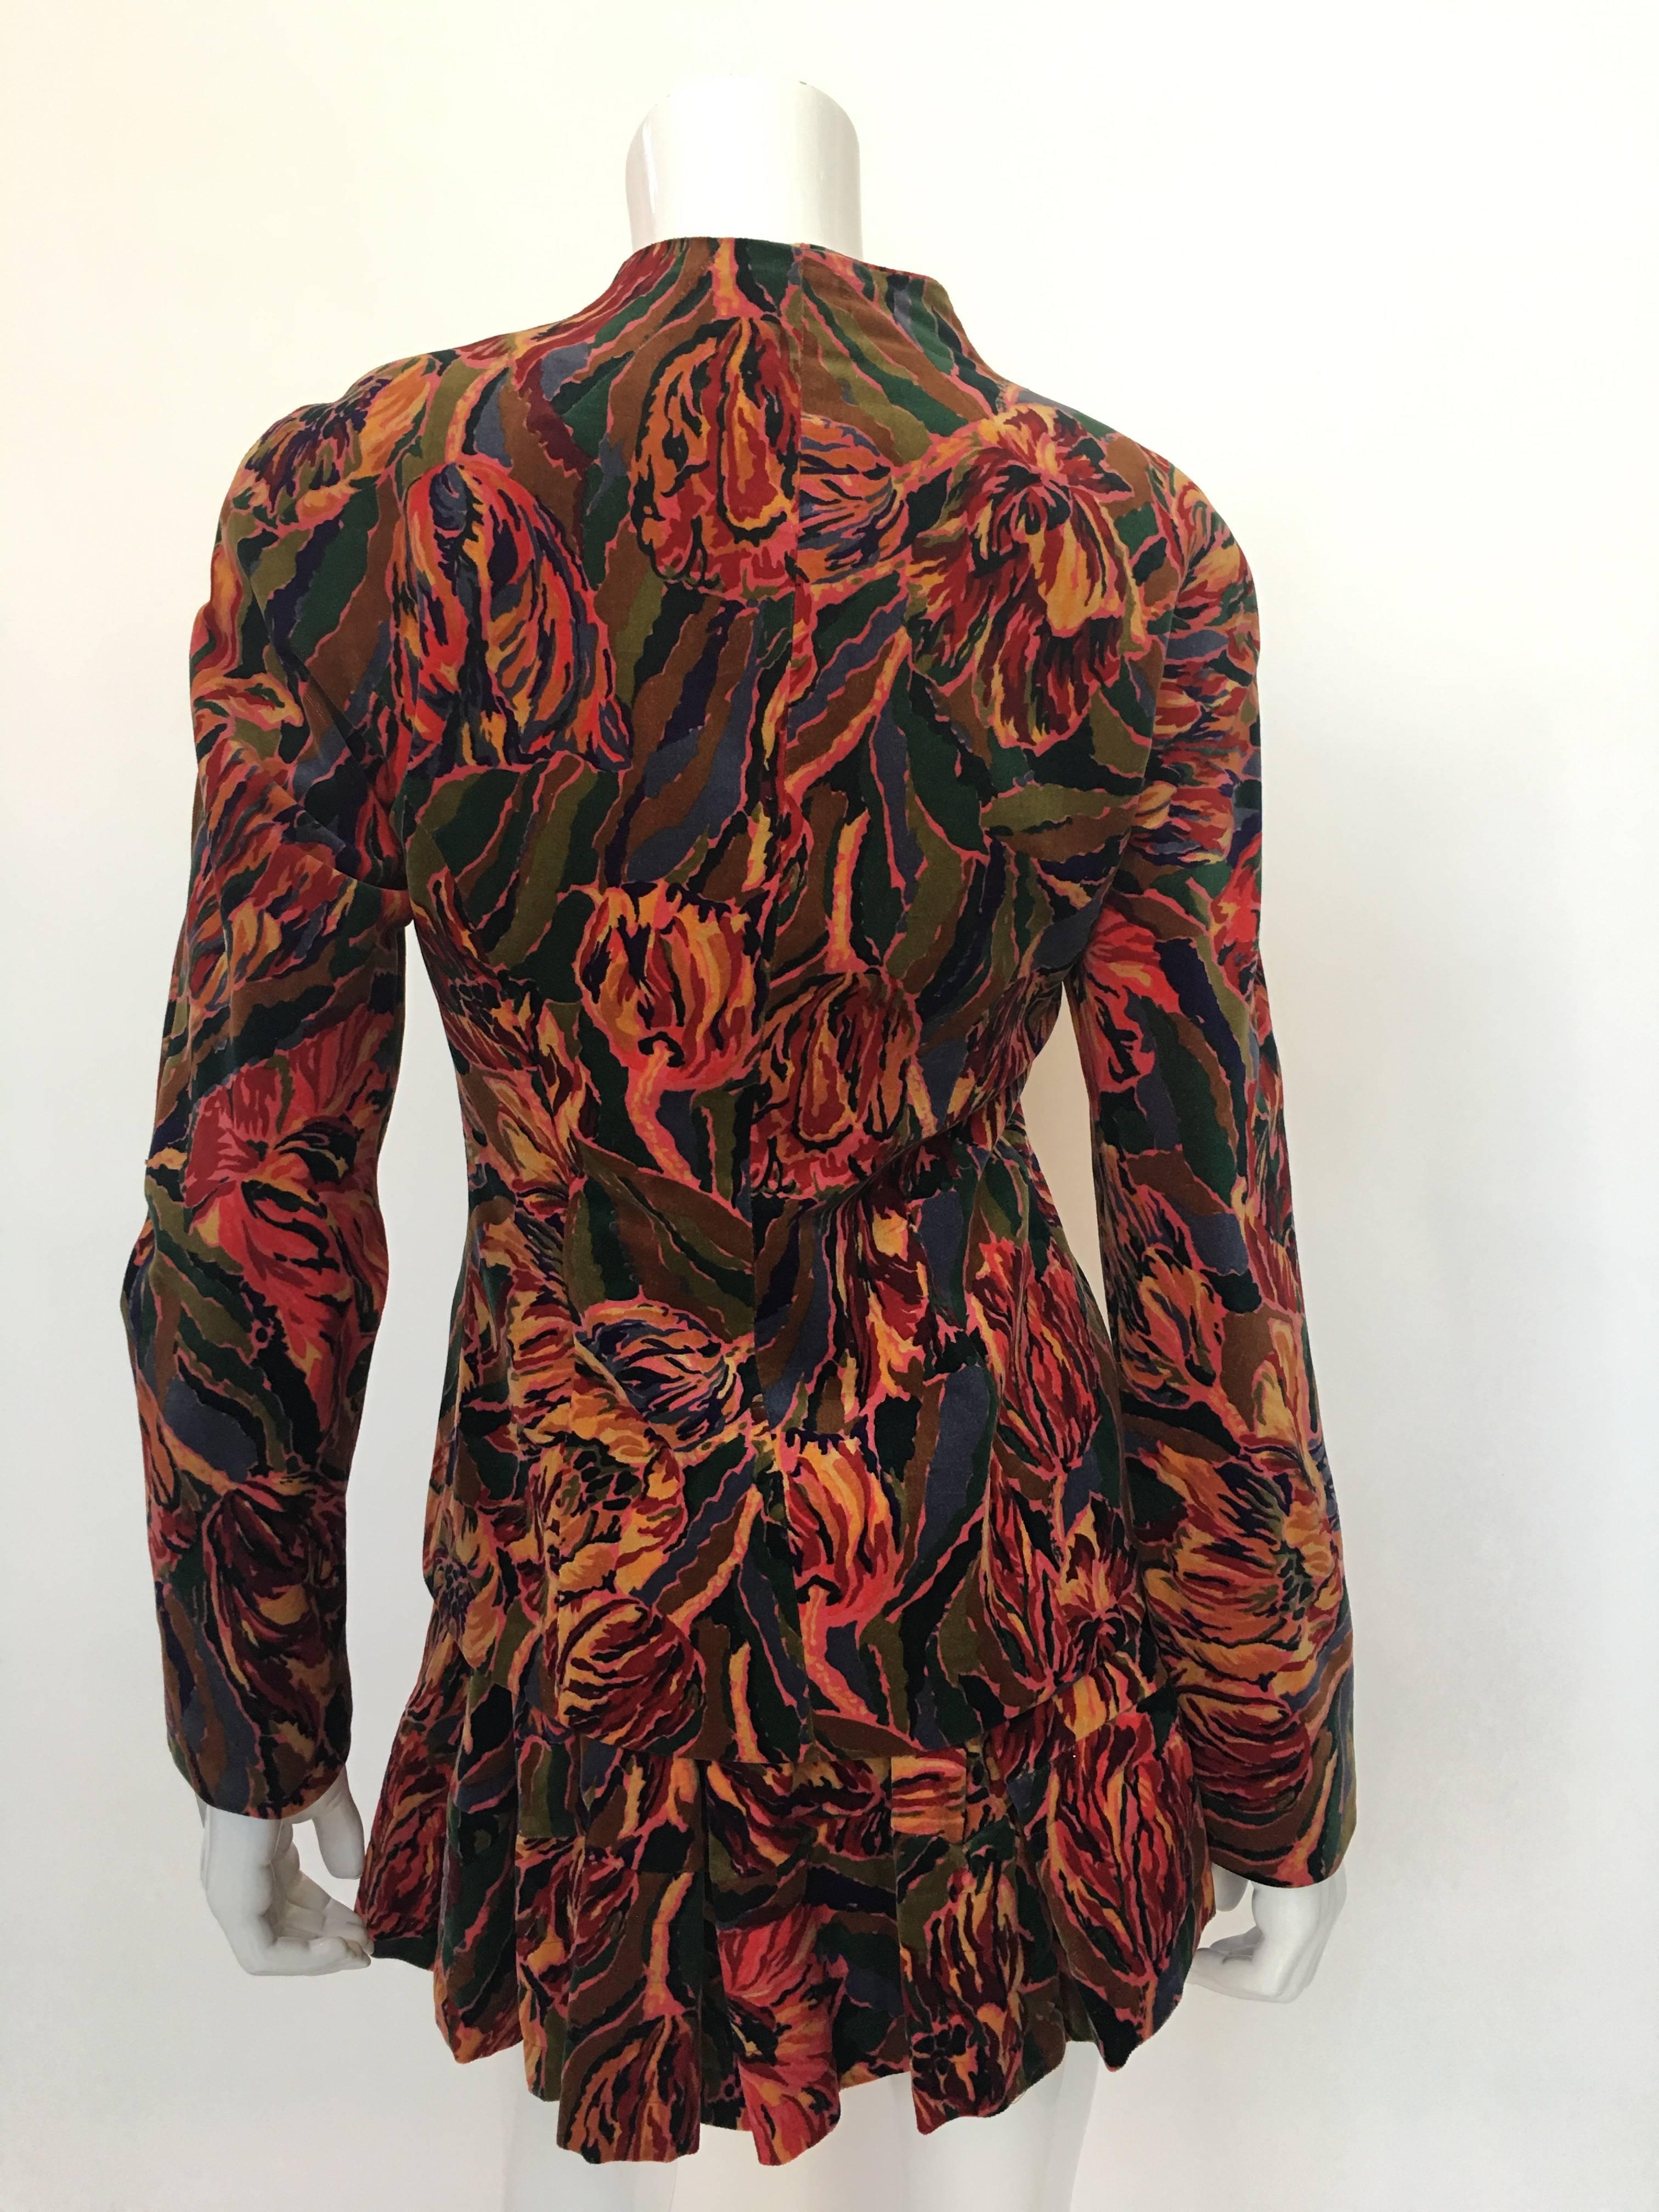 1990s Kenzo Paris Cotton Velvet Floral 3 Piece Skirt Suit

Made in France
Size label: EU 38

Measurements (taken flat)
Jacket: *has small shoulder pads*
Shoulders (approx): 17